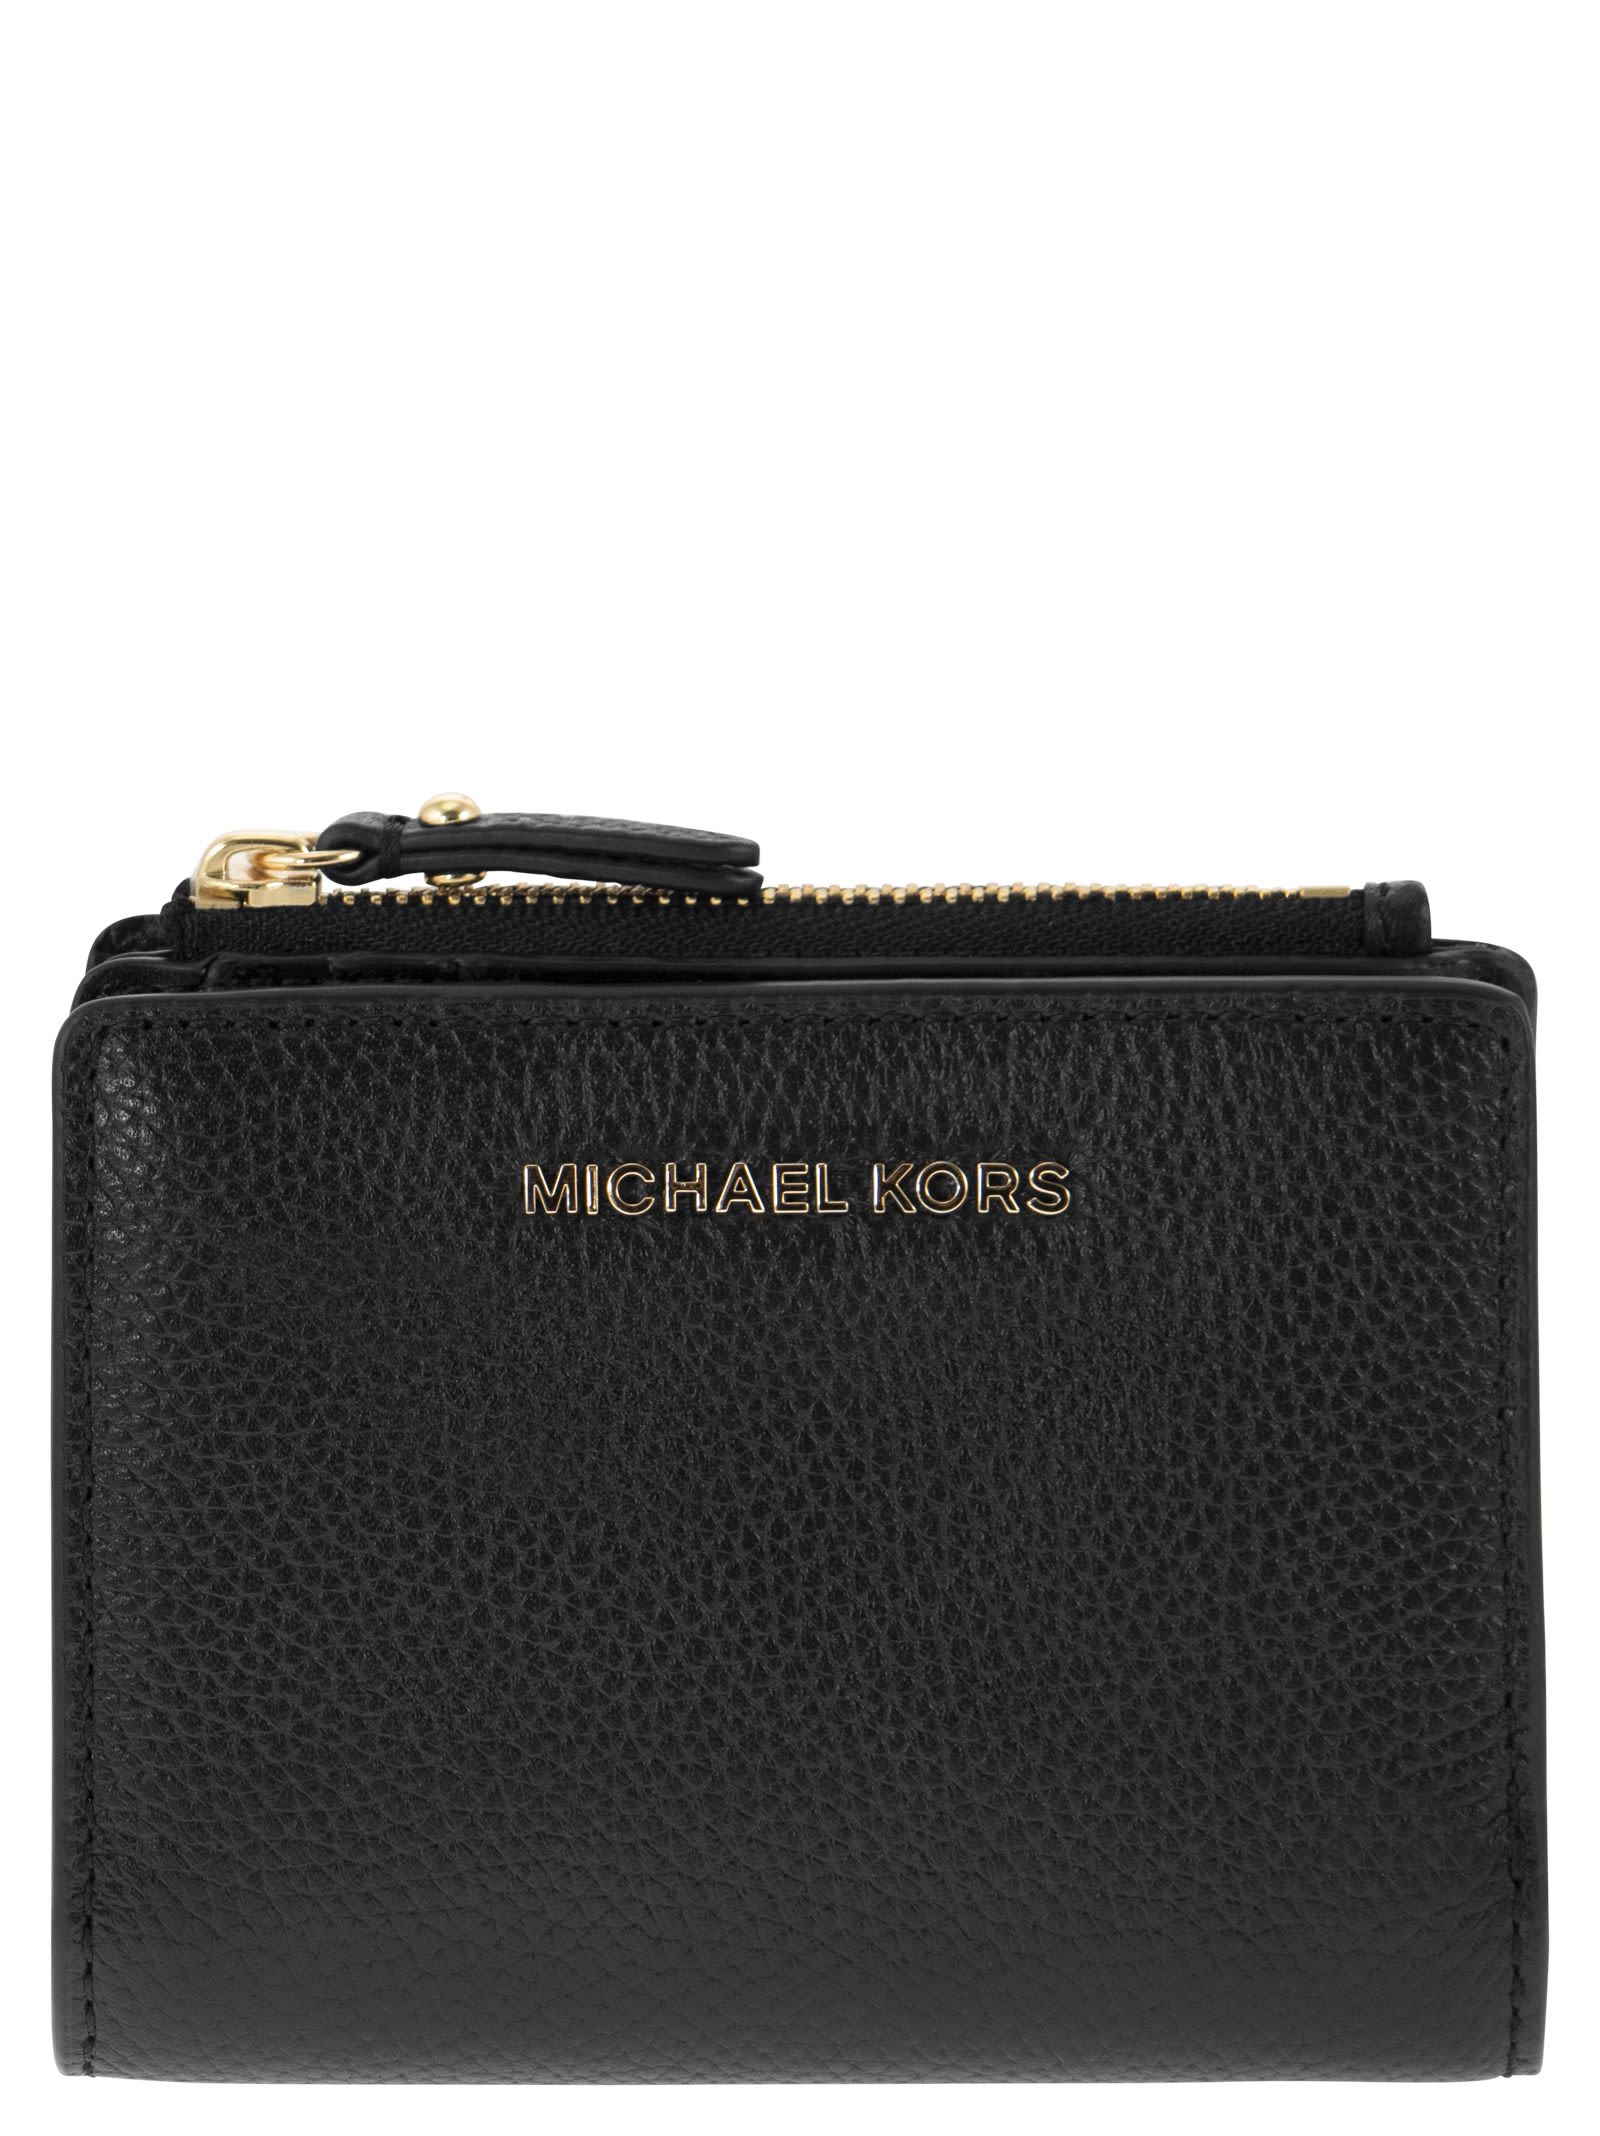 Michael Kors Leather Wallet In Black